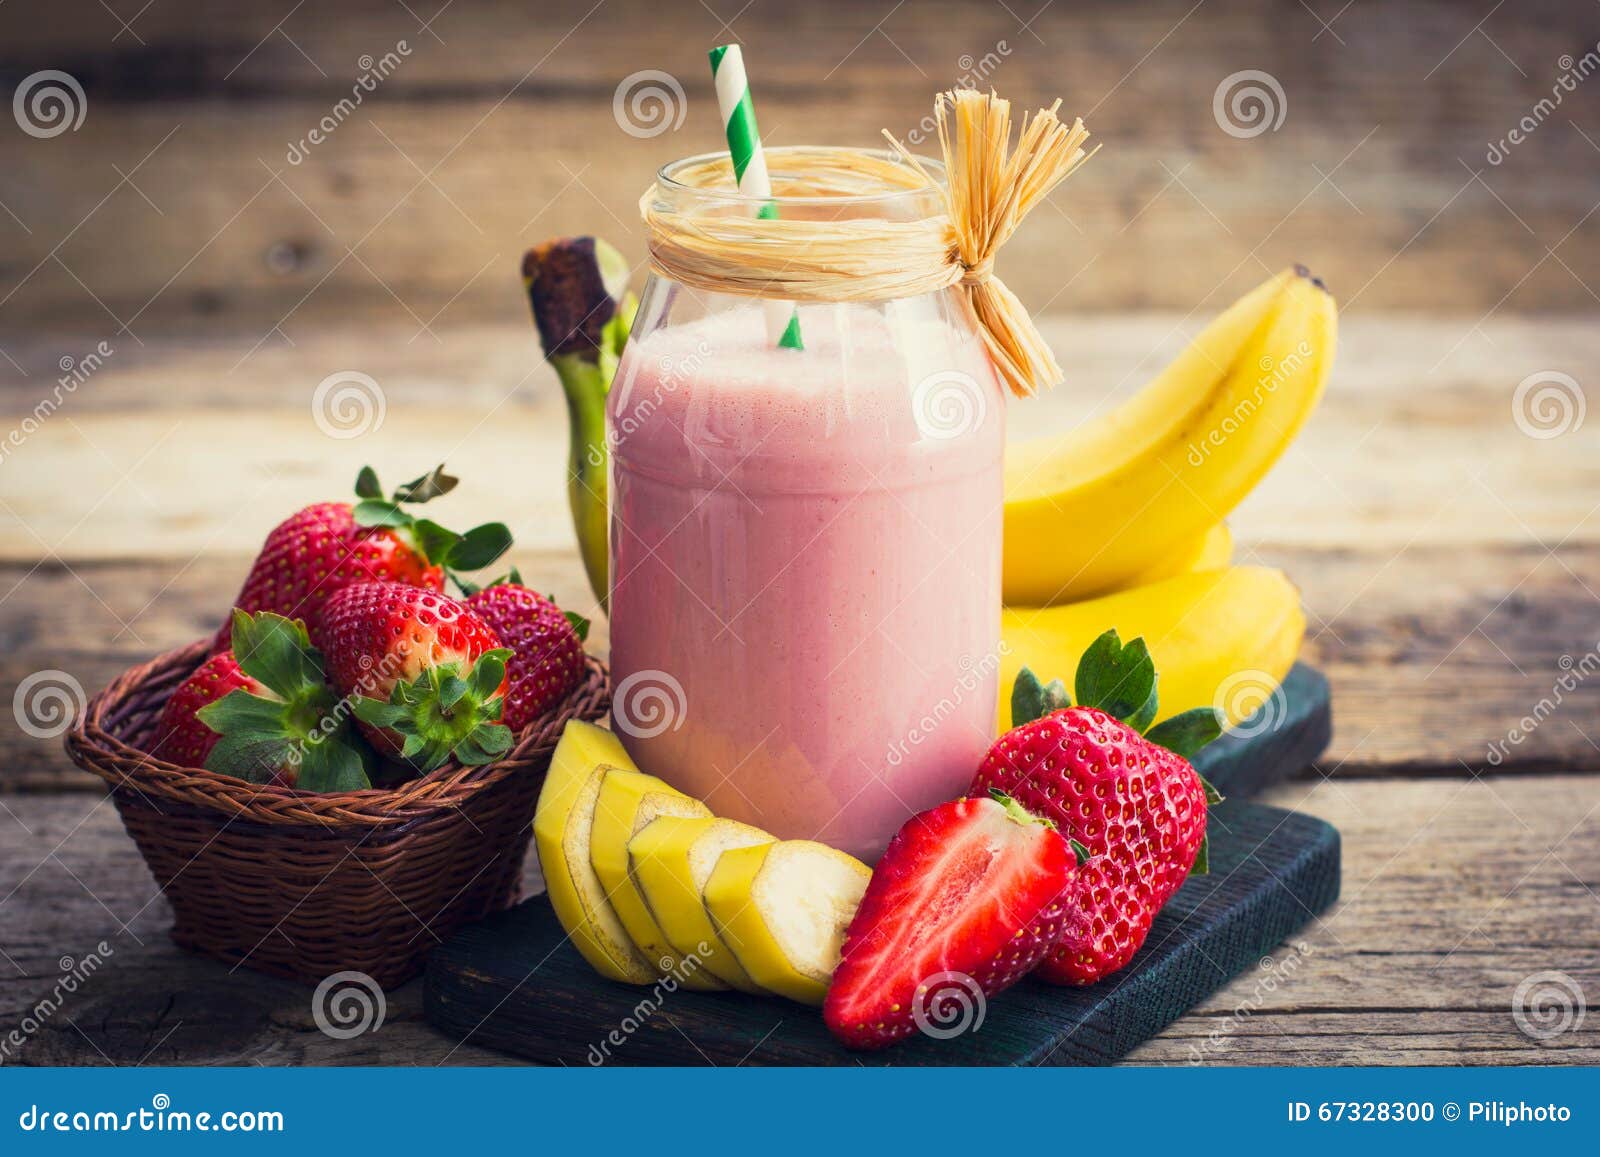 fresh strawberry and banana smoothie